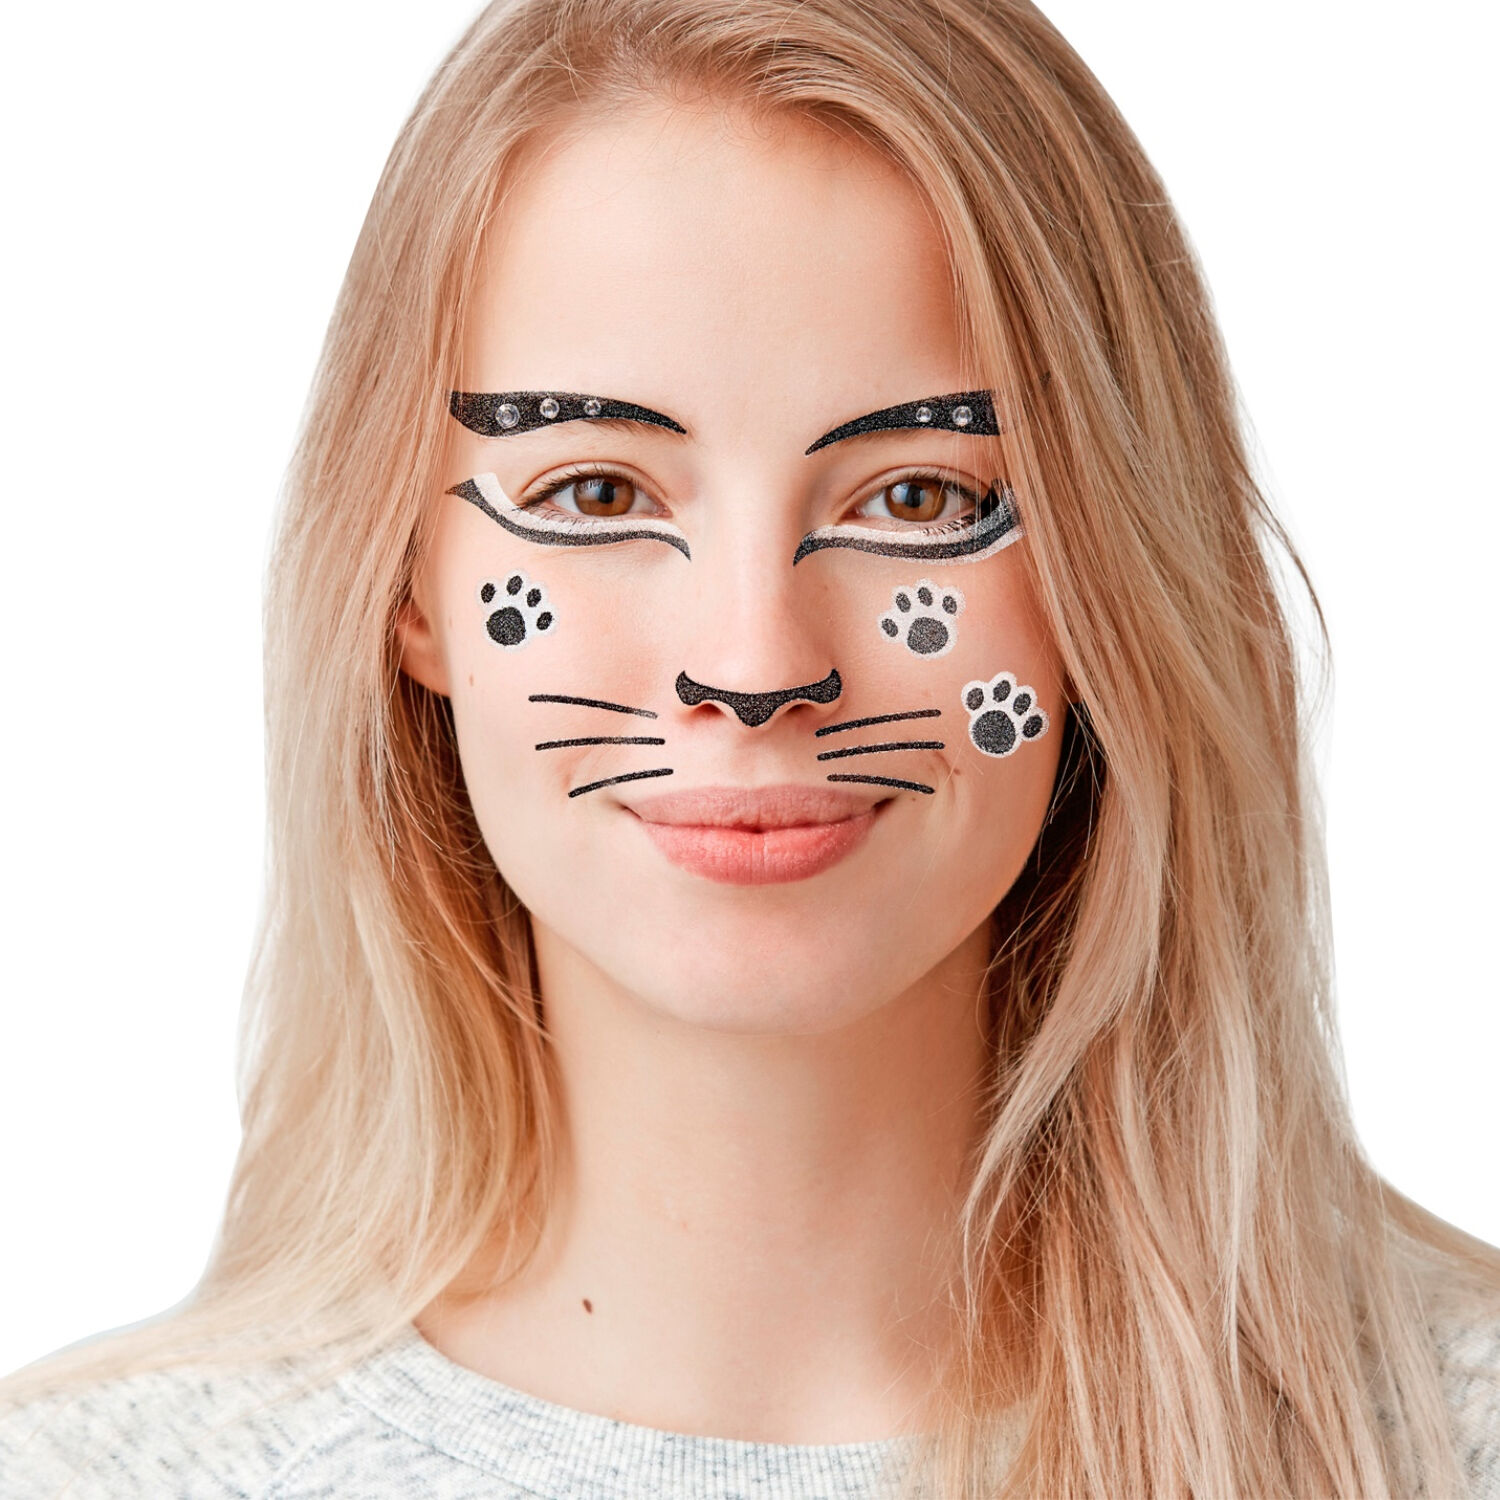 NEU Gesichts-Tattoos / Aufkleber Katze, glitzernd, selbstklebend Bild 2